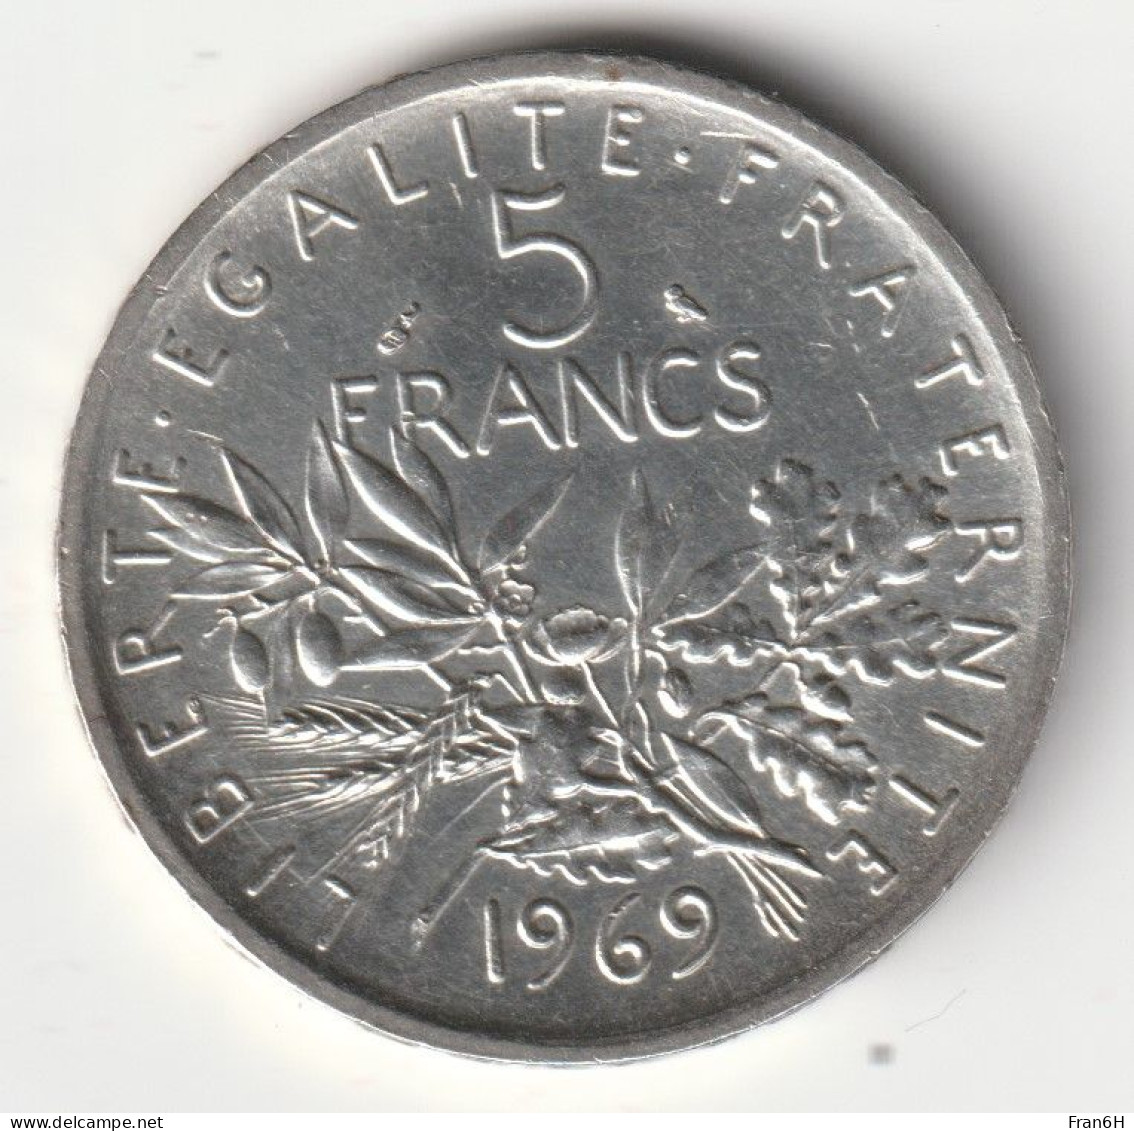 5 Francs Argent 1969 - Silver - - 5 Francs